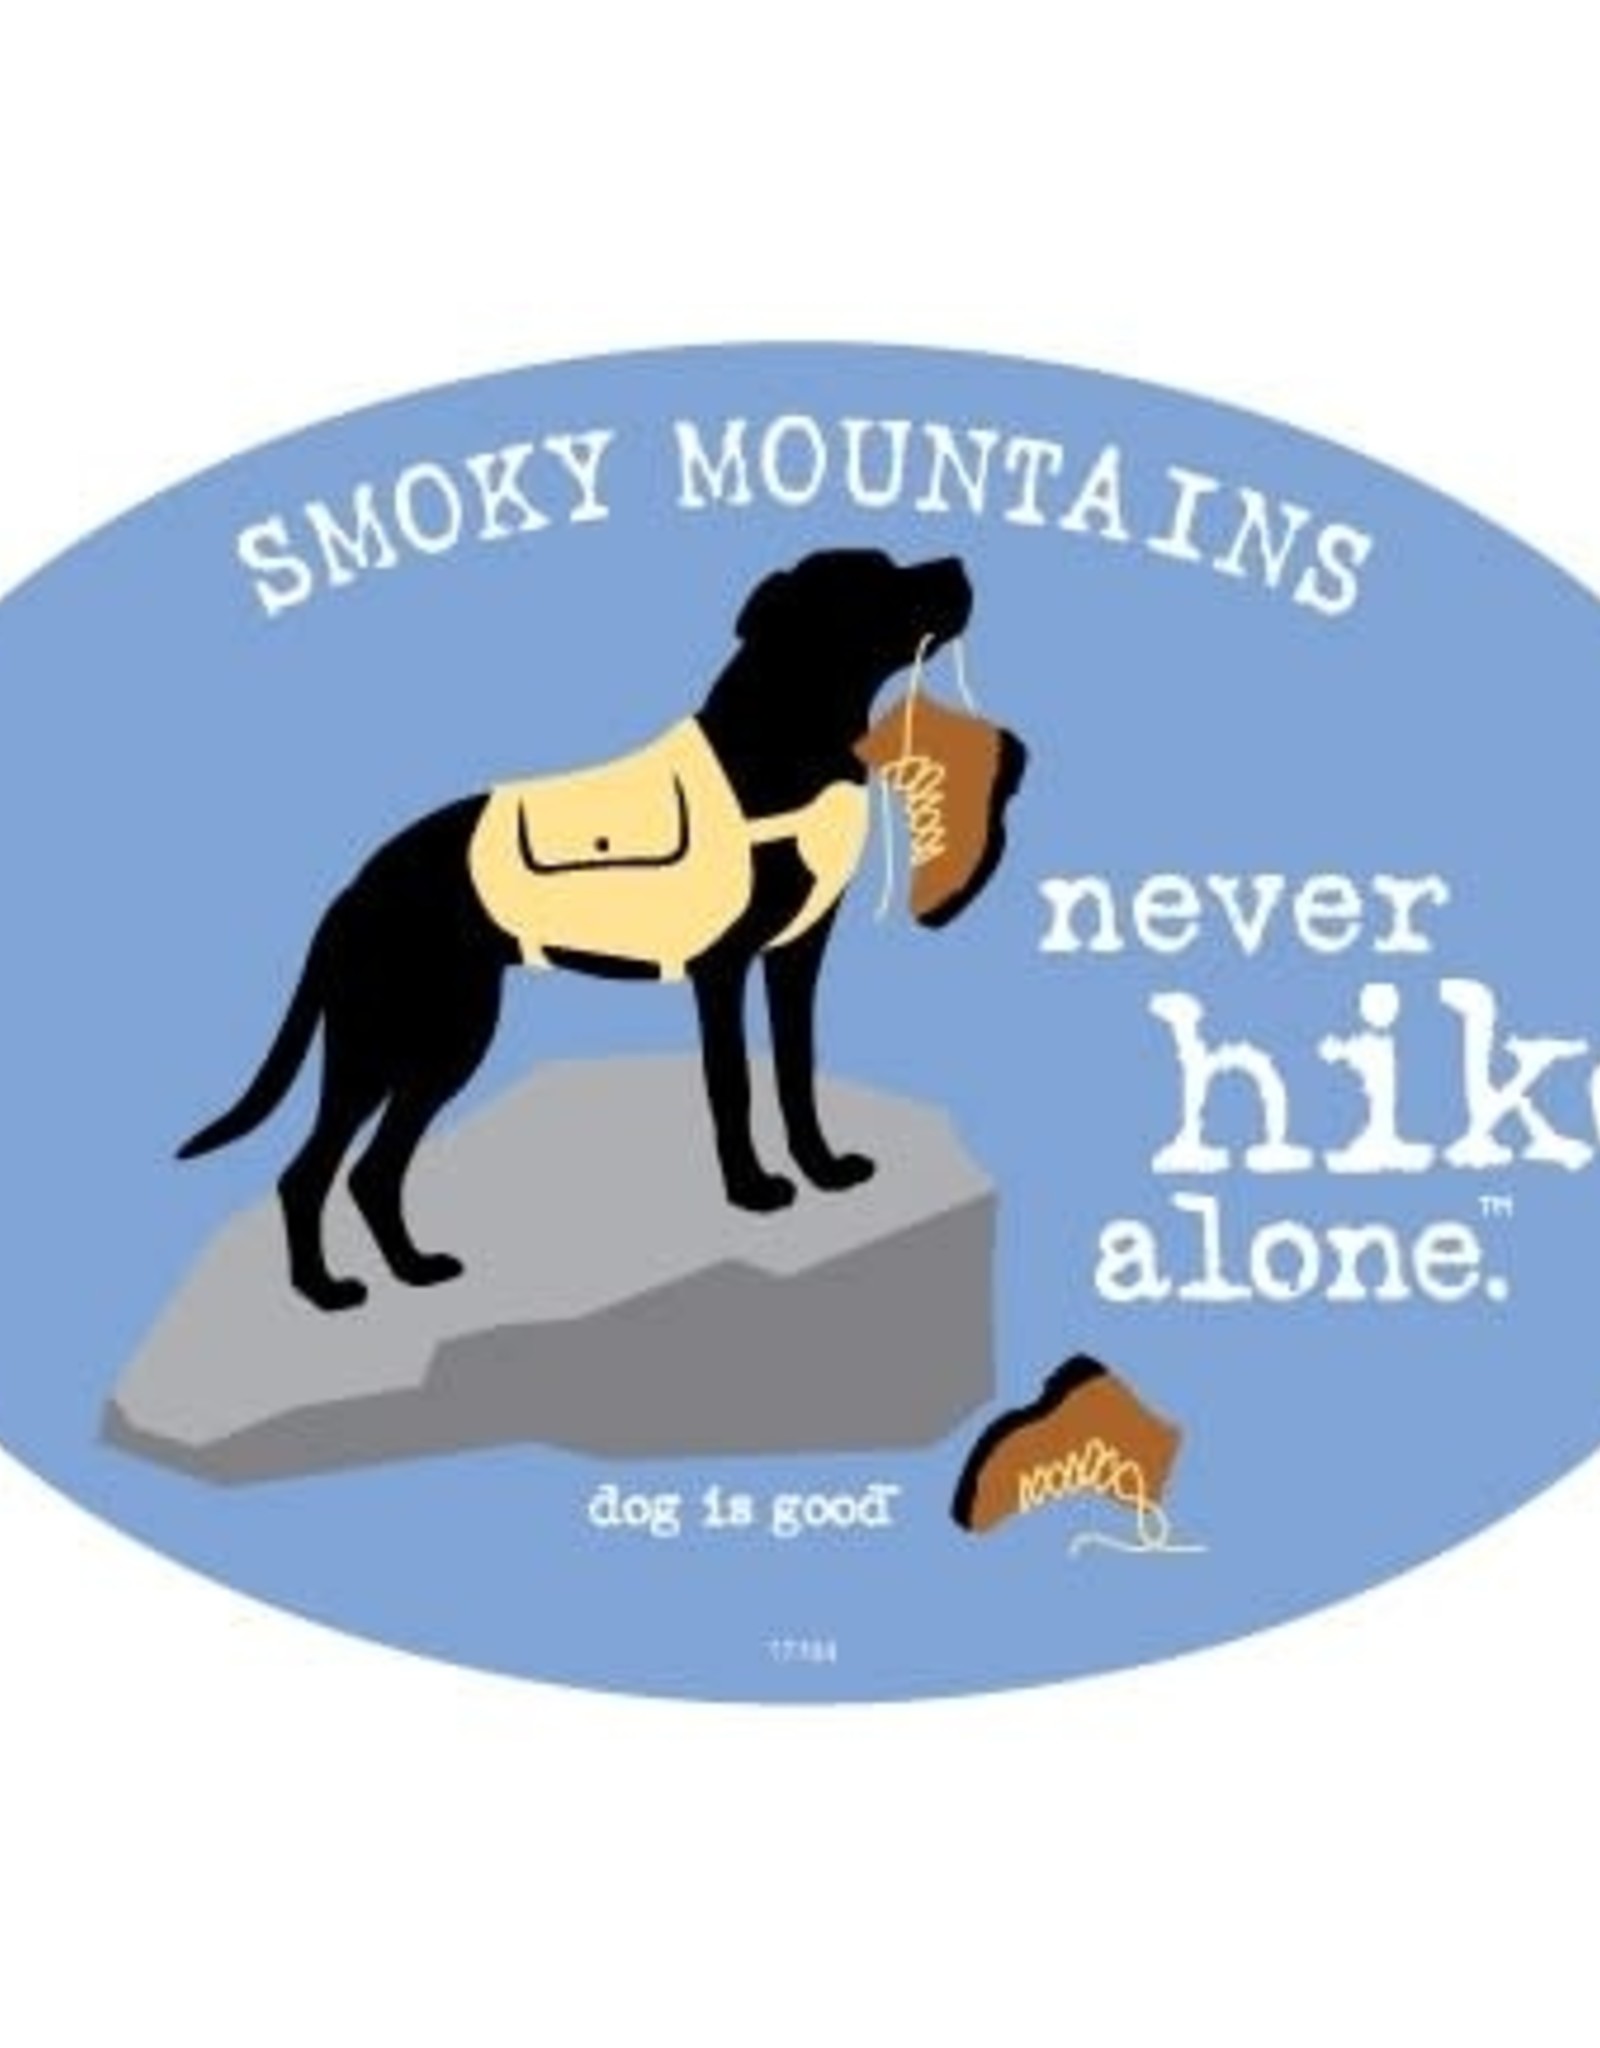 Dog Is Good Car Magnet: Never Hike Alone - Destination Boise, Idaho